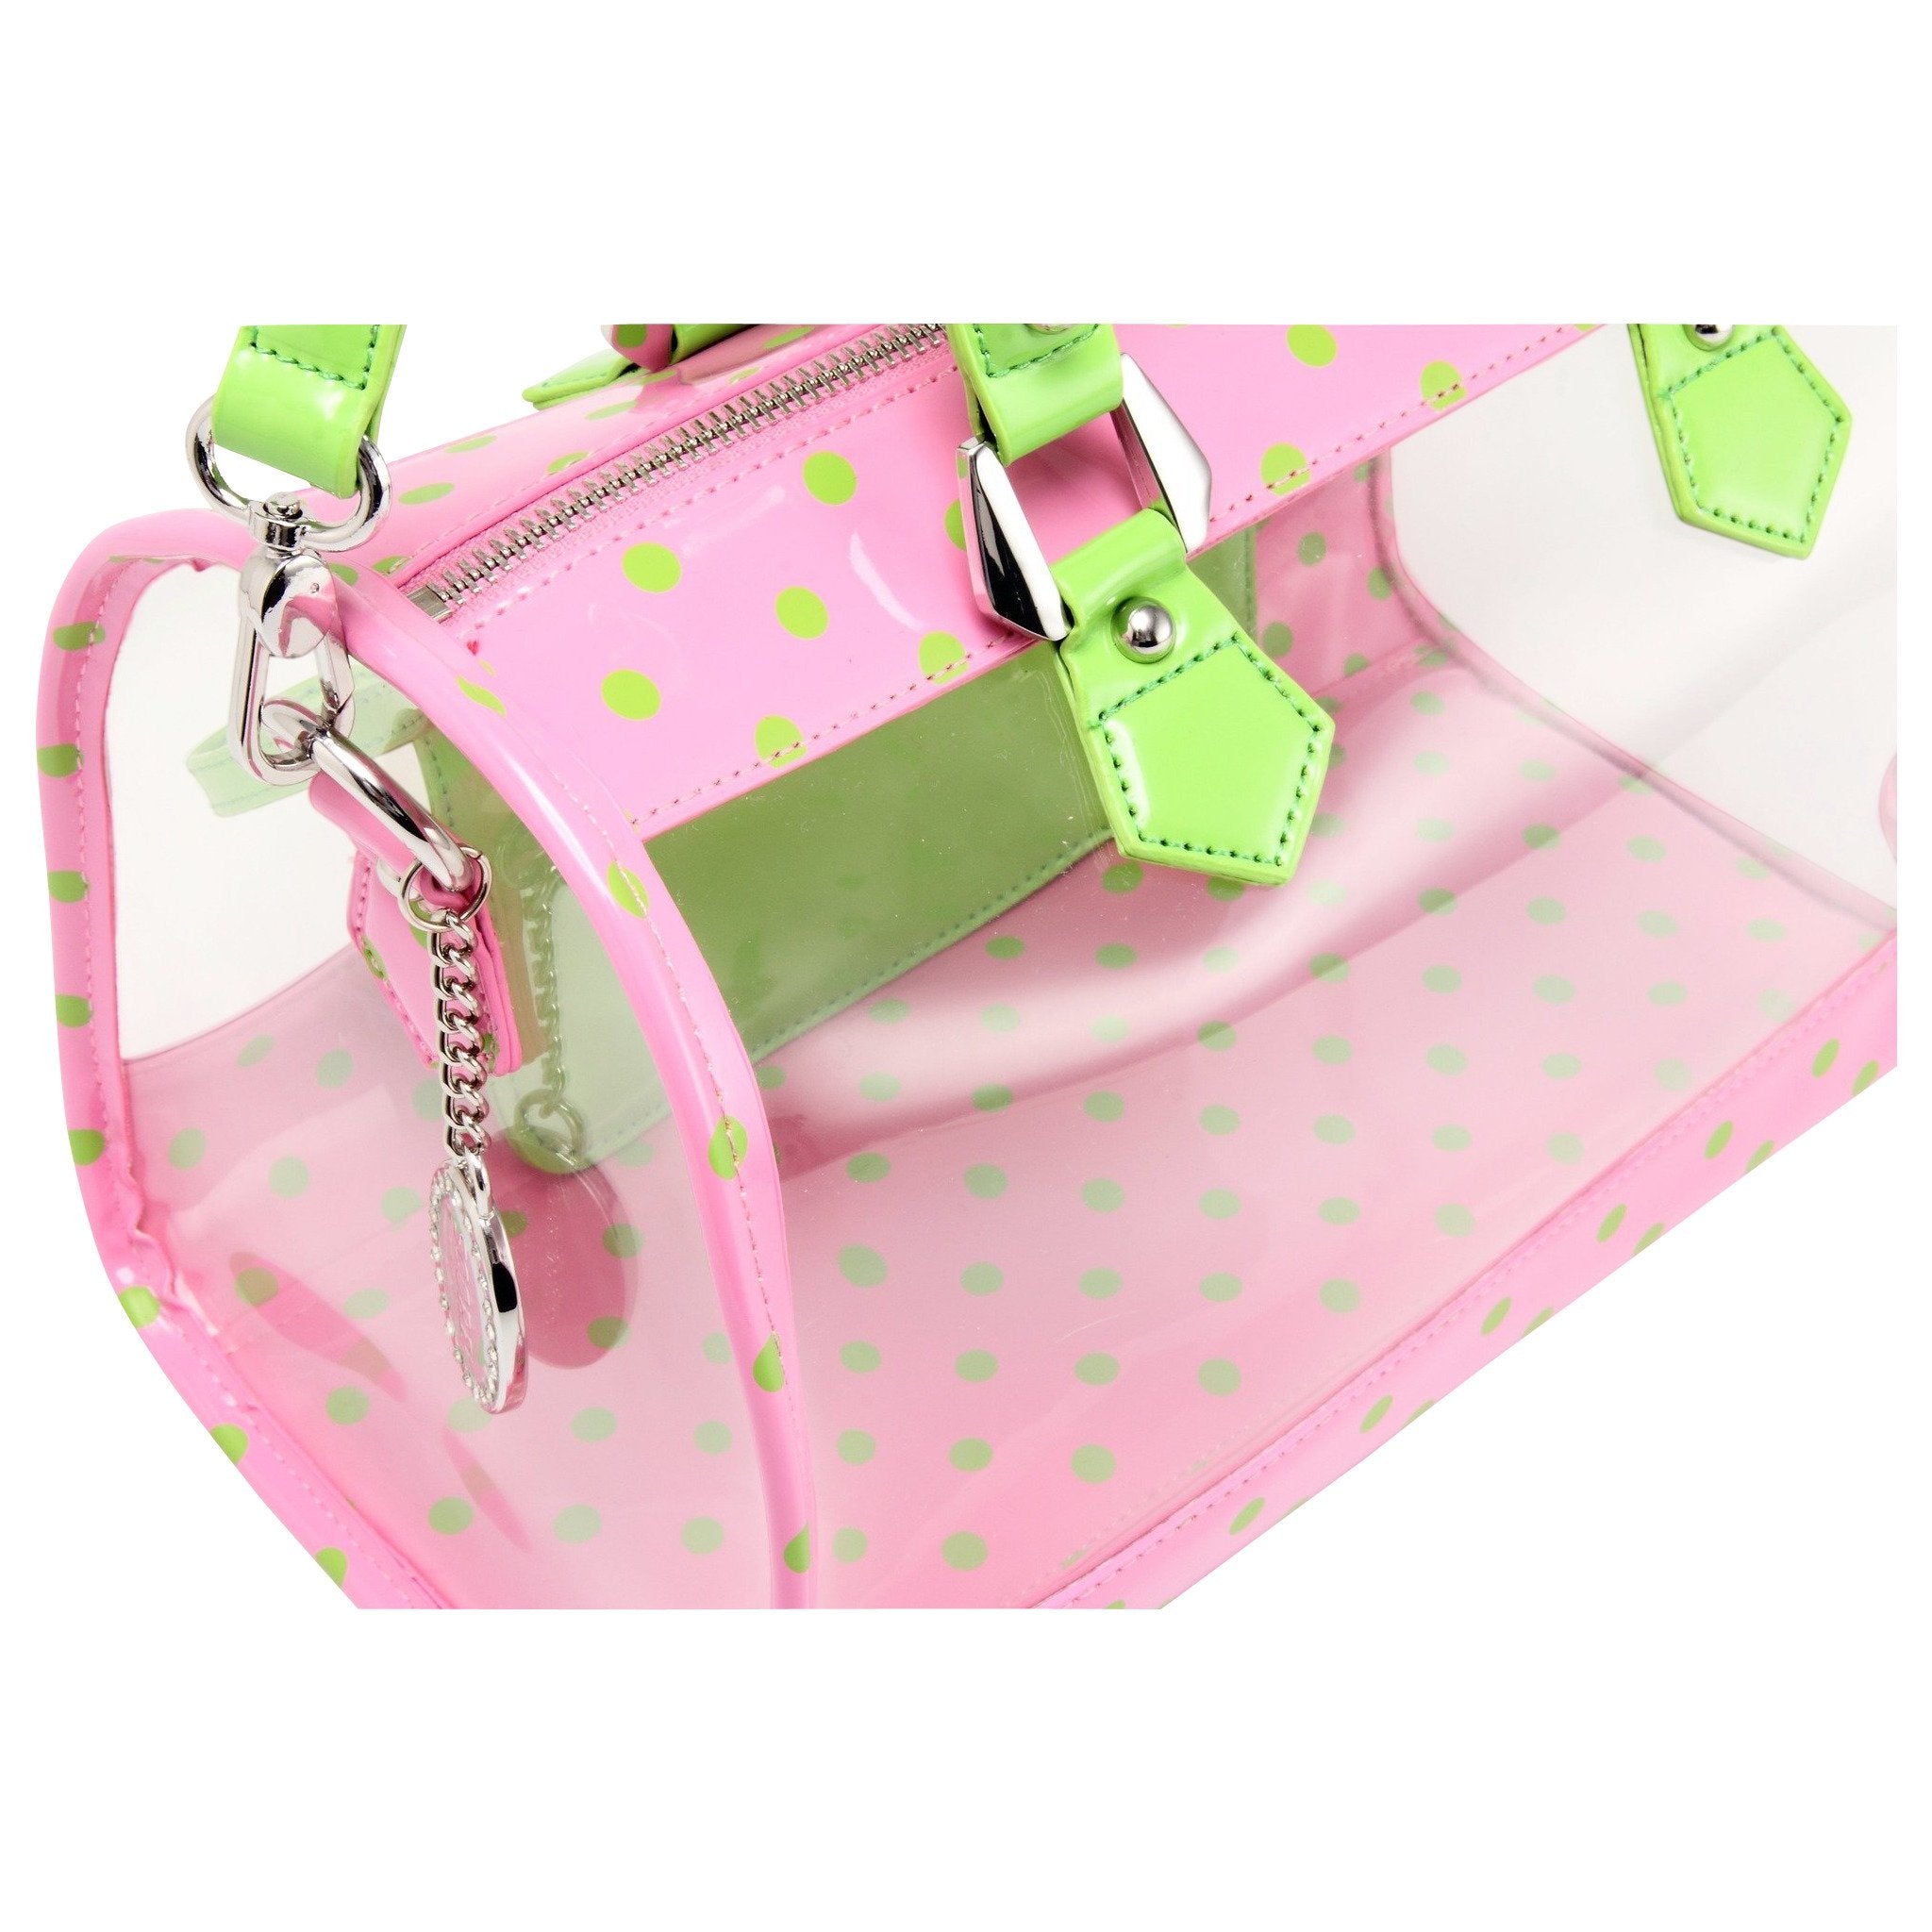 Choosing a fashionable handbag under 100$ | Girly fashion pink, Girly  things, Girly accessories